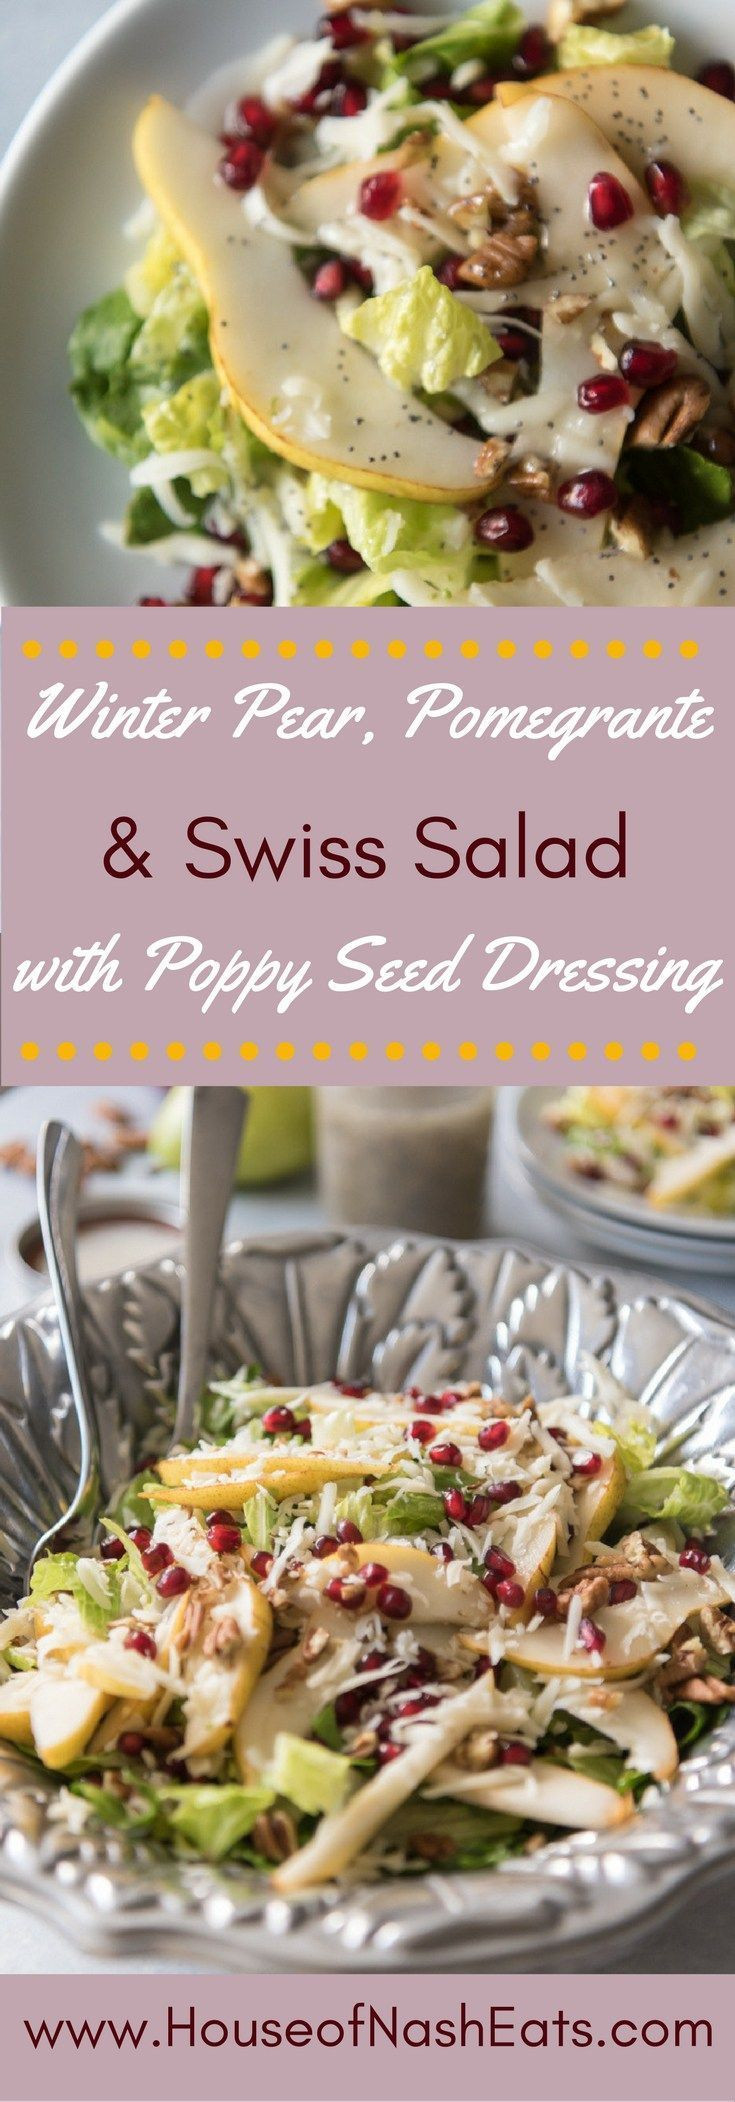 Salads For Christmas Dinner Recipes
 100 Christmas Salad Recipes on Pinterest